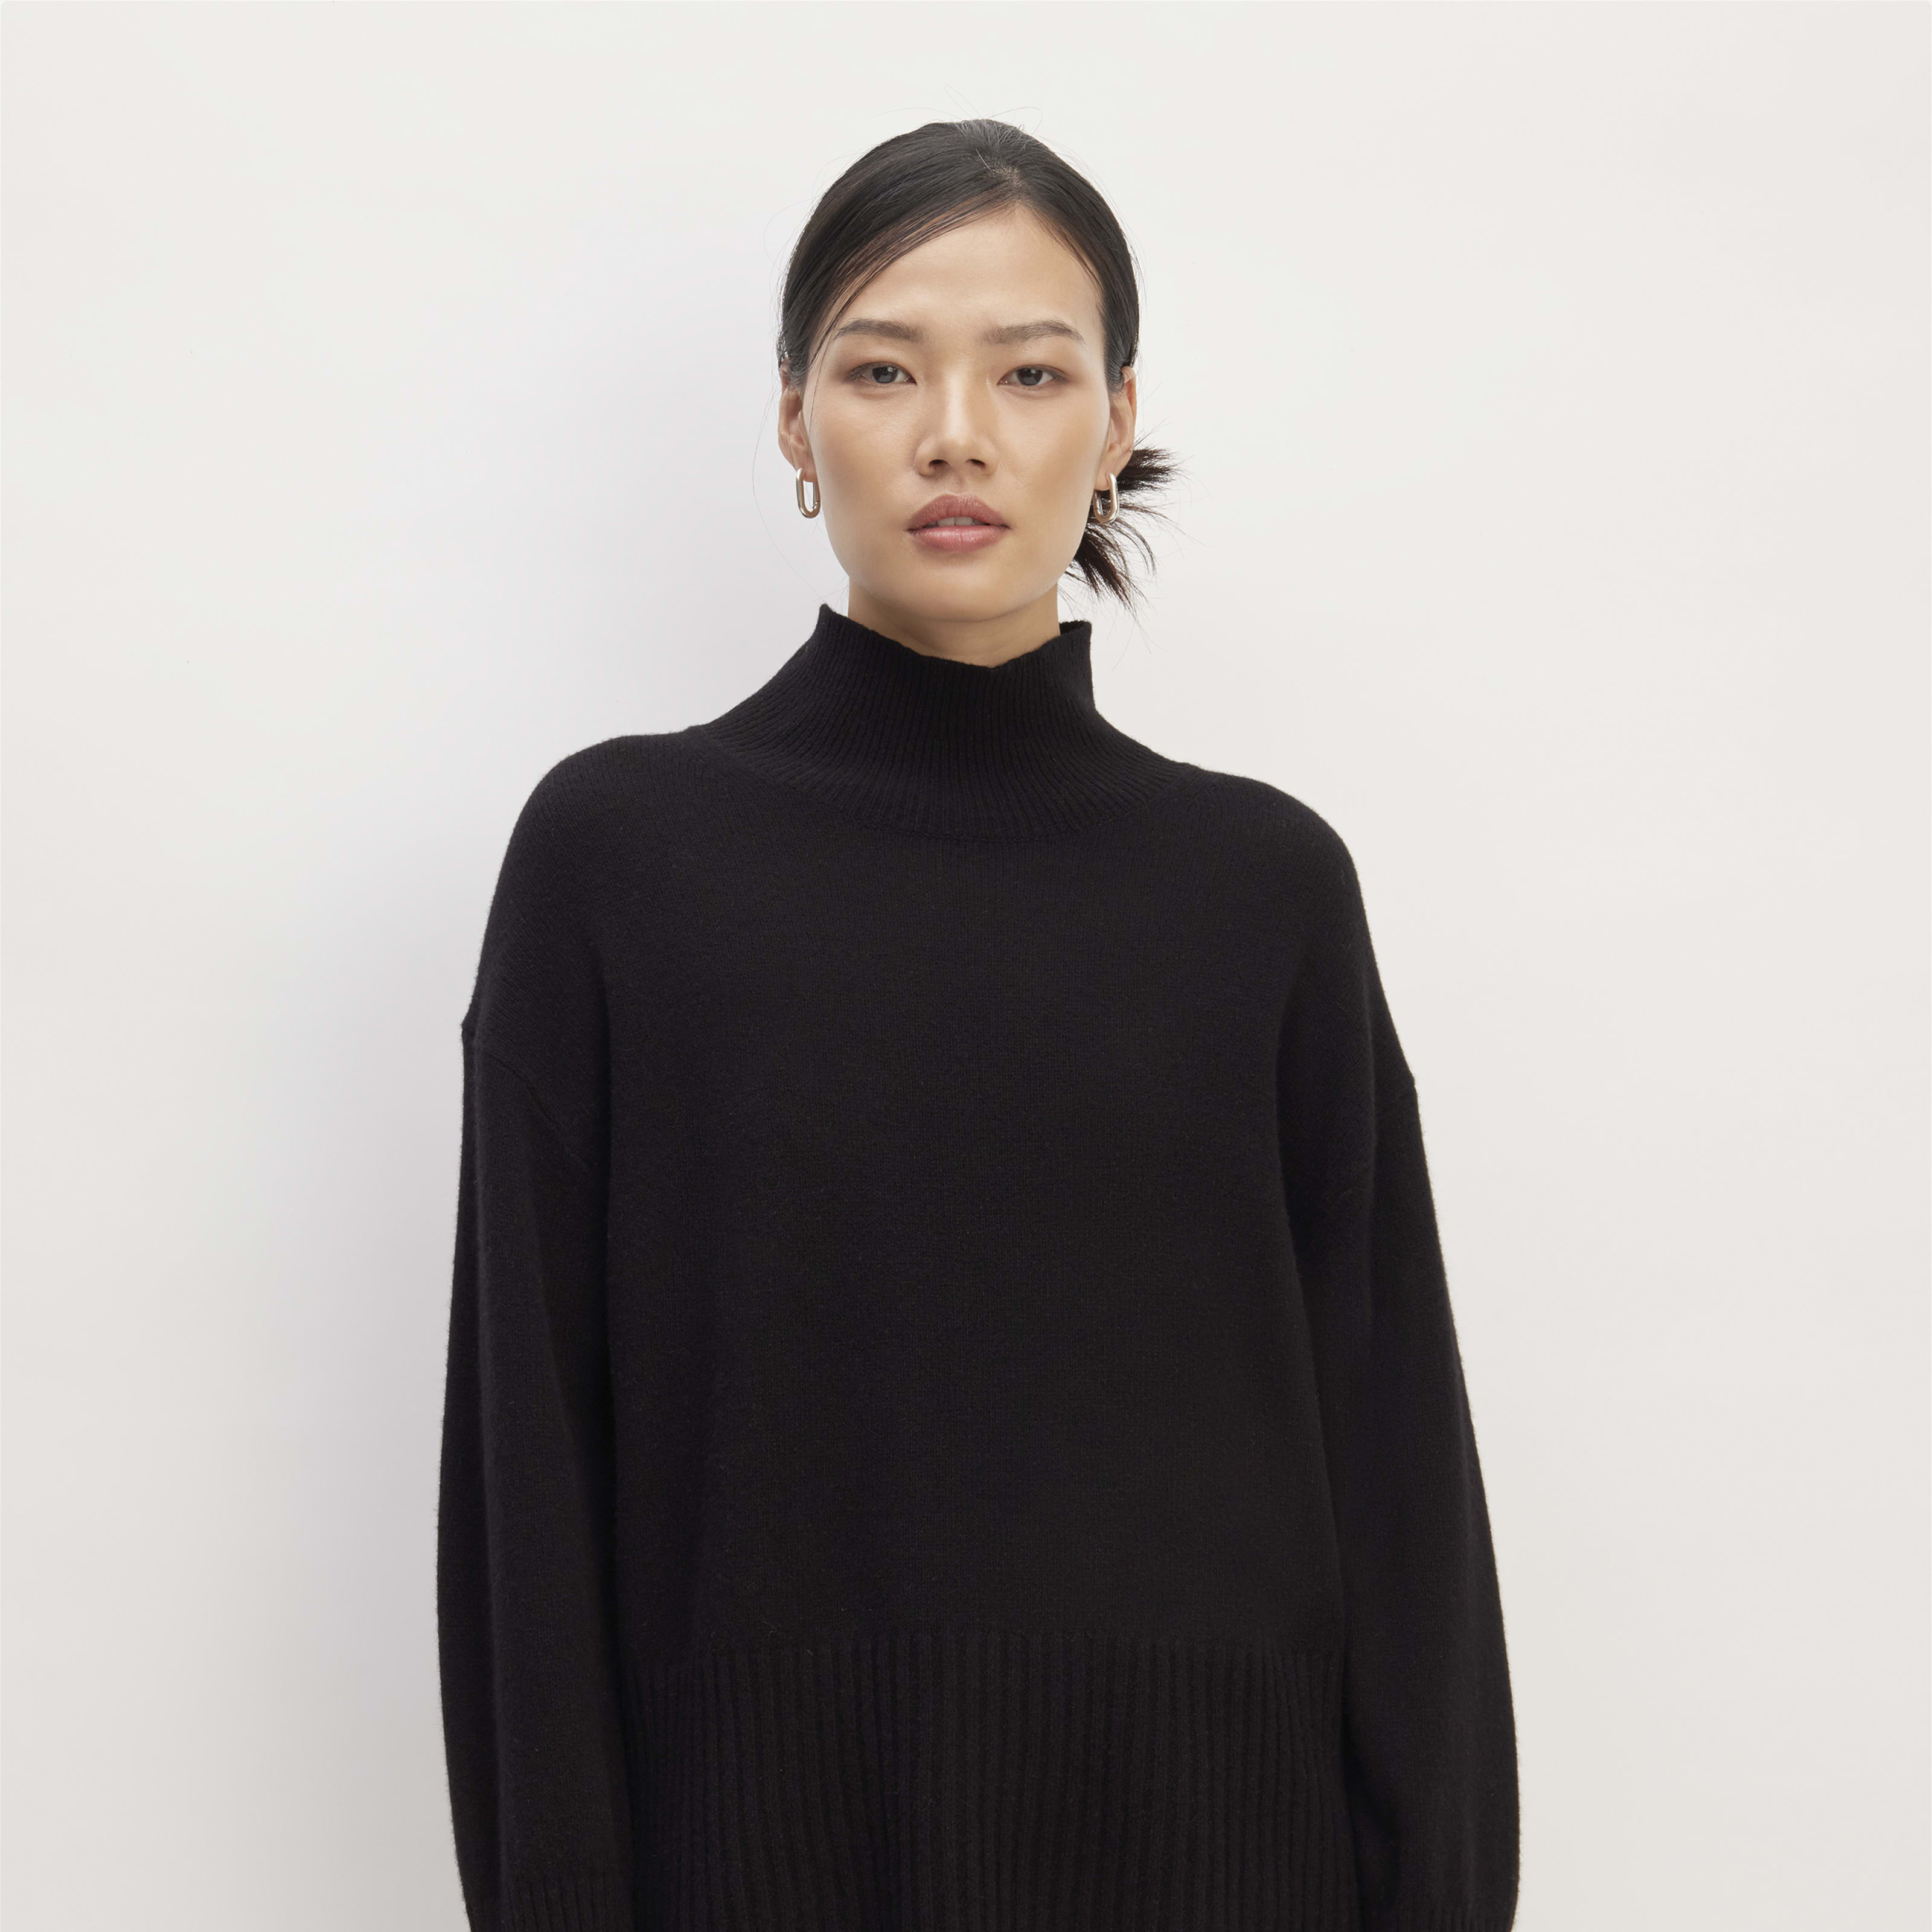 women's cashmere oversized turtleneck sweater by everlane in black, size xxs